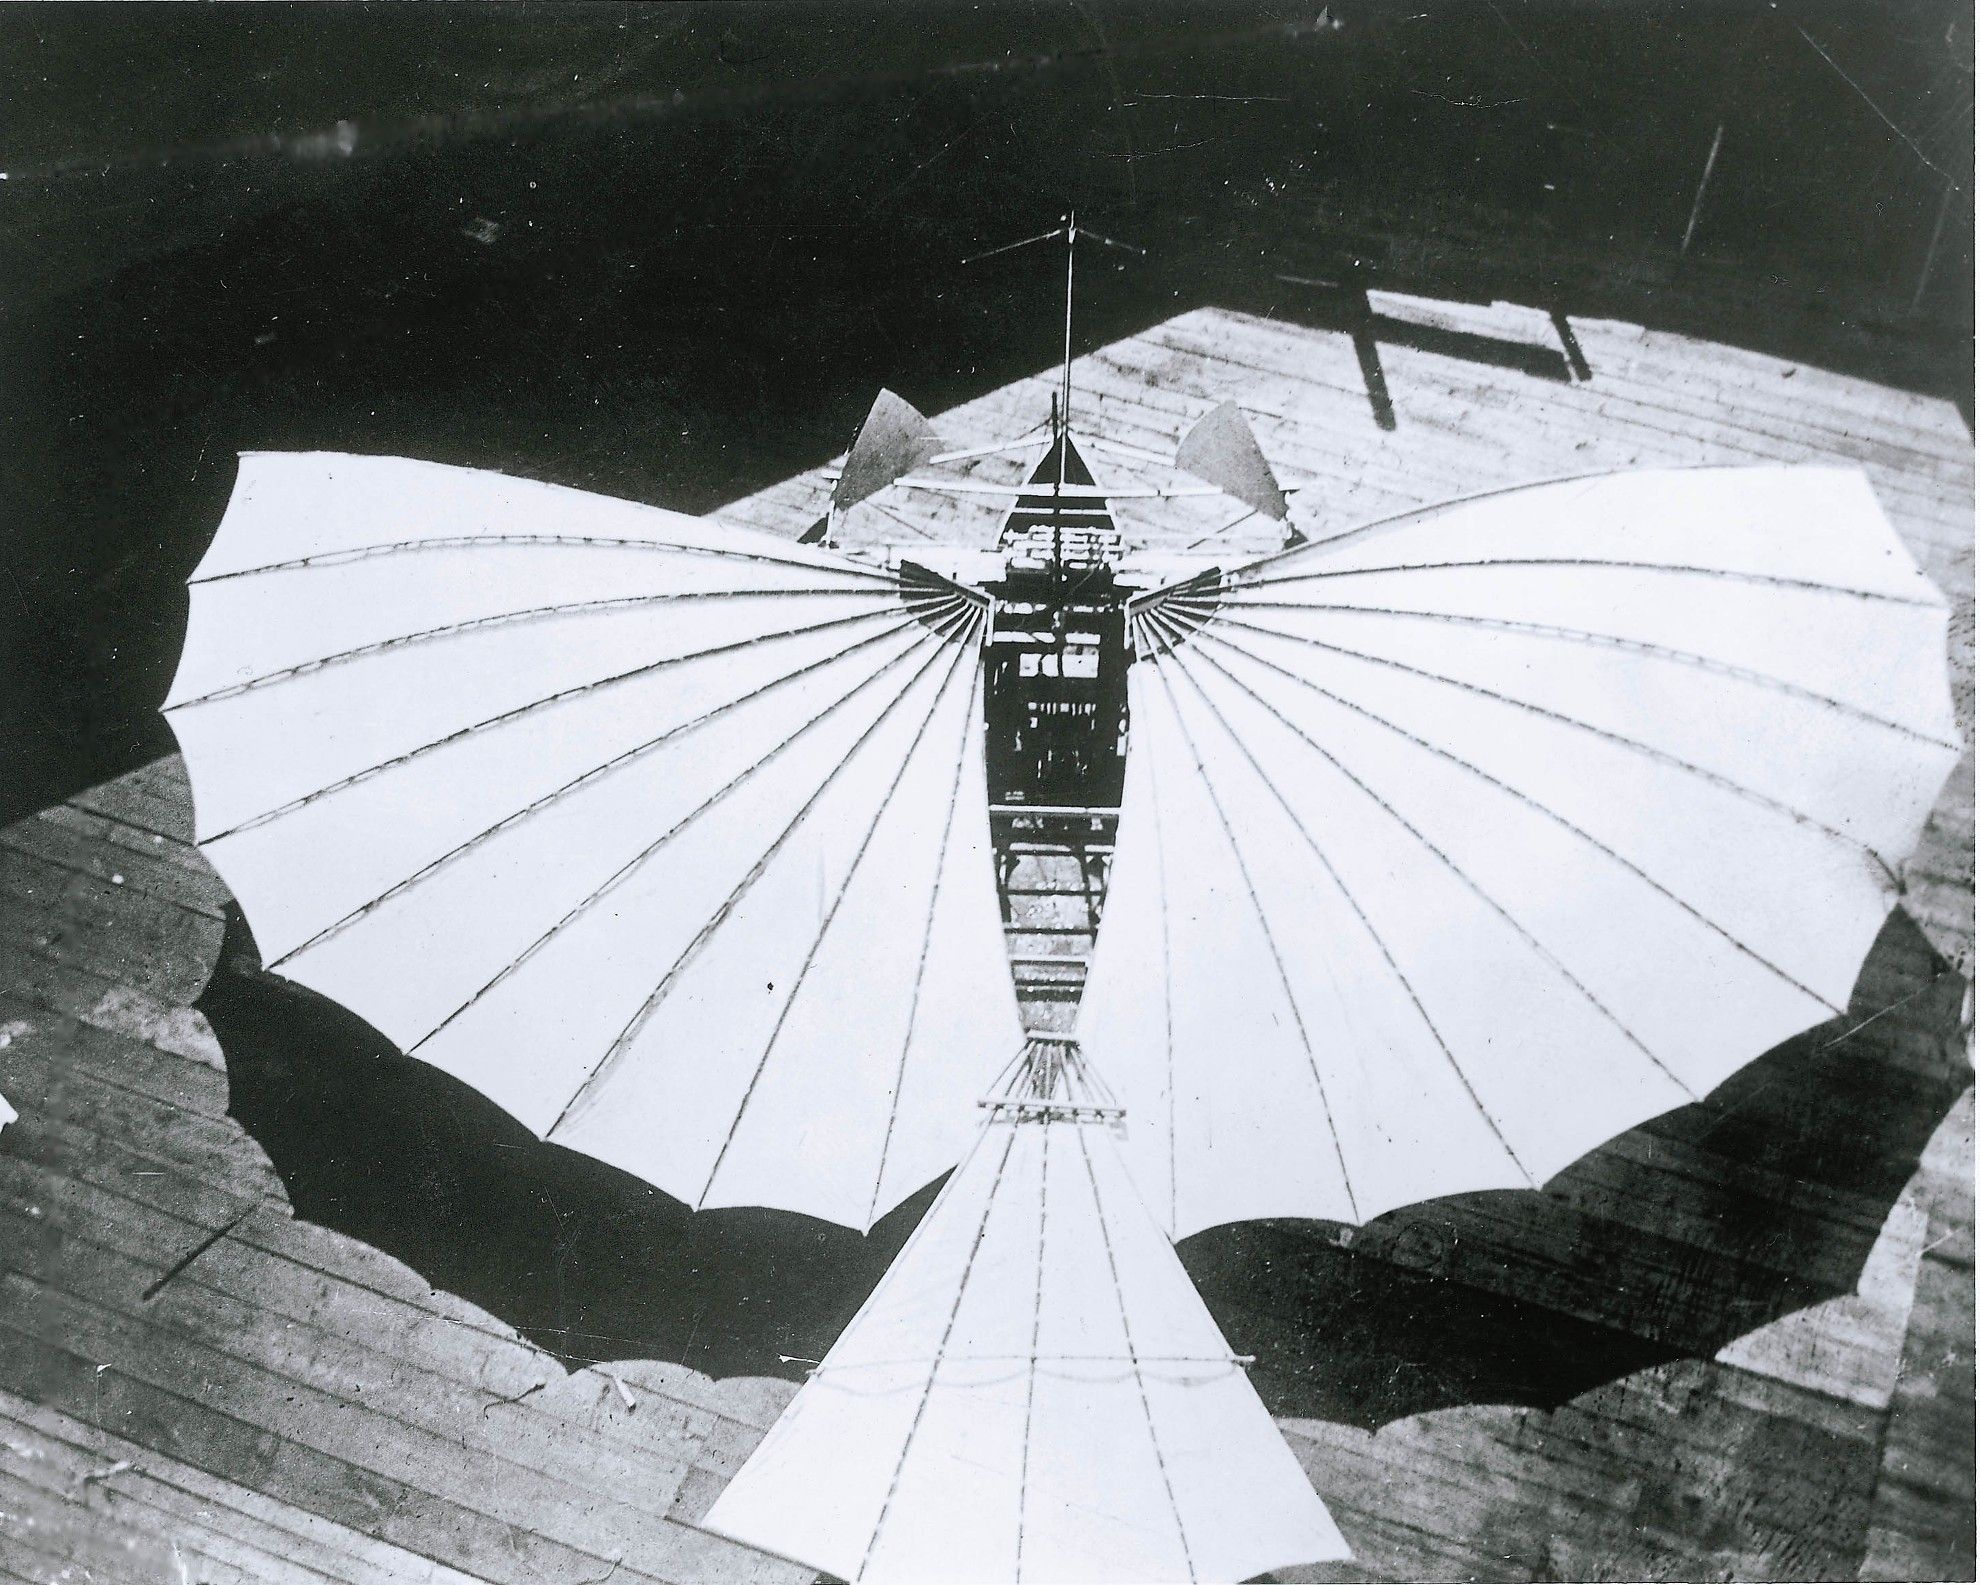 Whiteheads Flying Machine "No. 21".